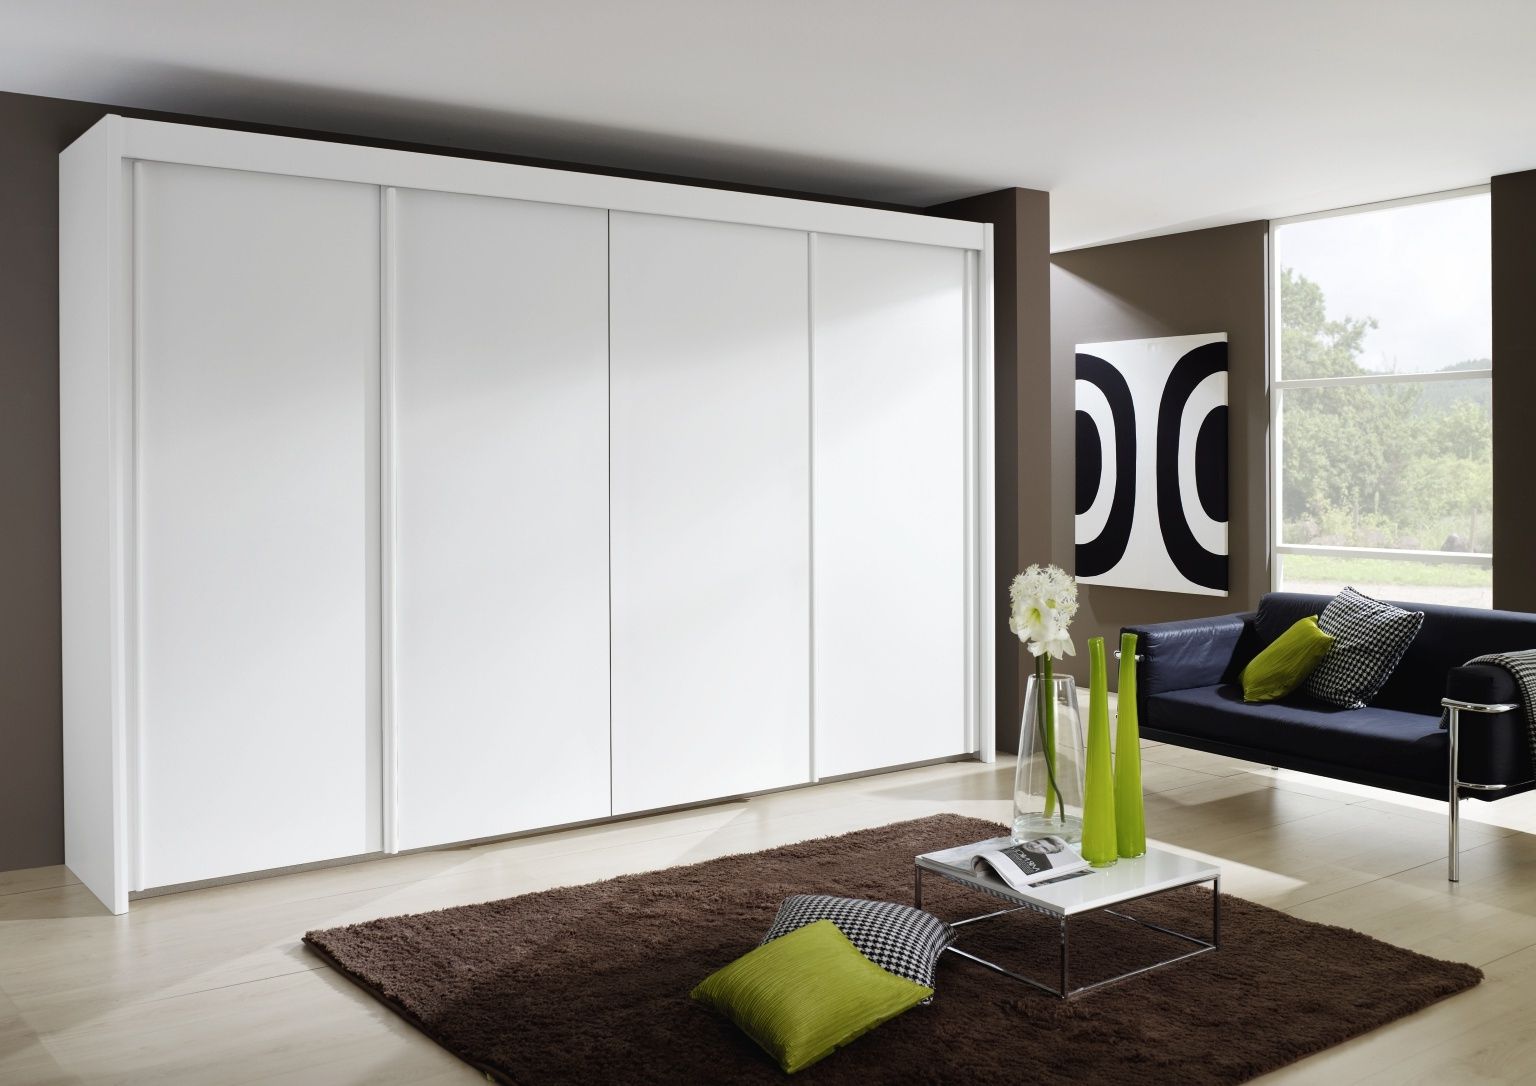 Rauch Imperial 4 Door Sliding Wardrobe In White – W 350cm – Cfs Furniture Uk In 4 Door White Wardrobes (View 10 of 20)